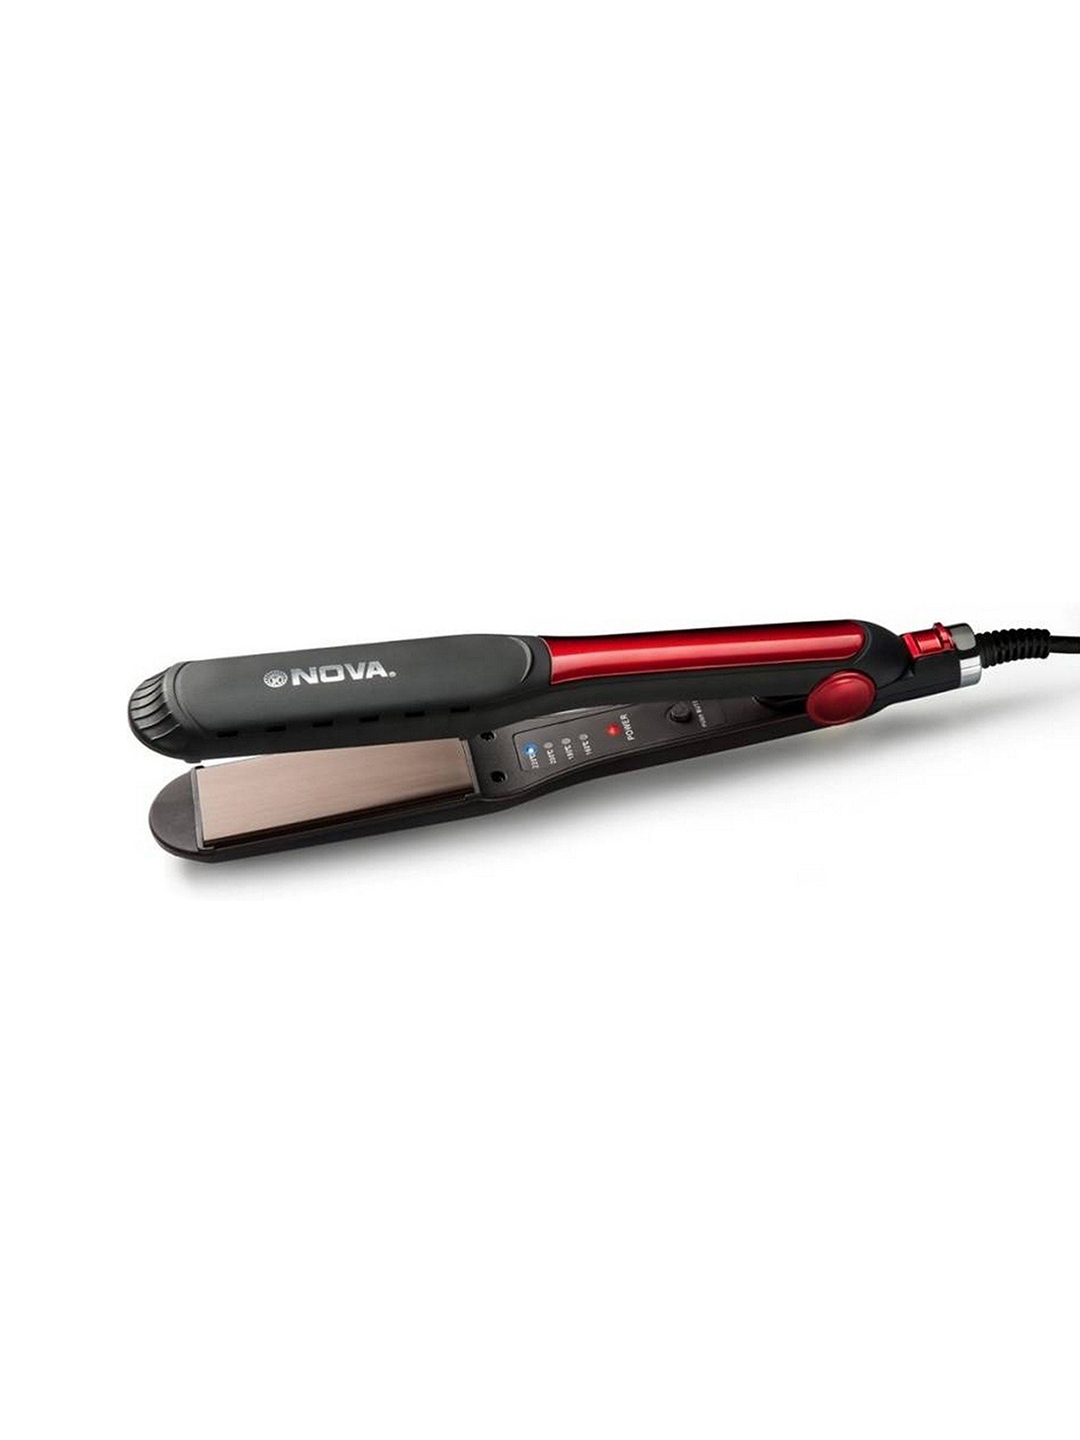 NOVA NHS 982/00 Temperature Control Professional Hair Straightener   Black   Red